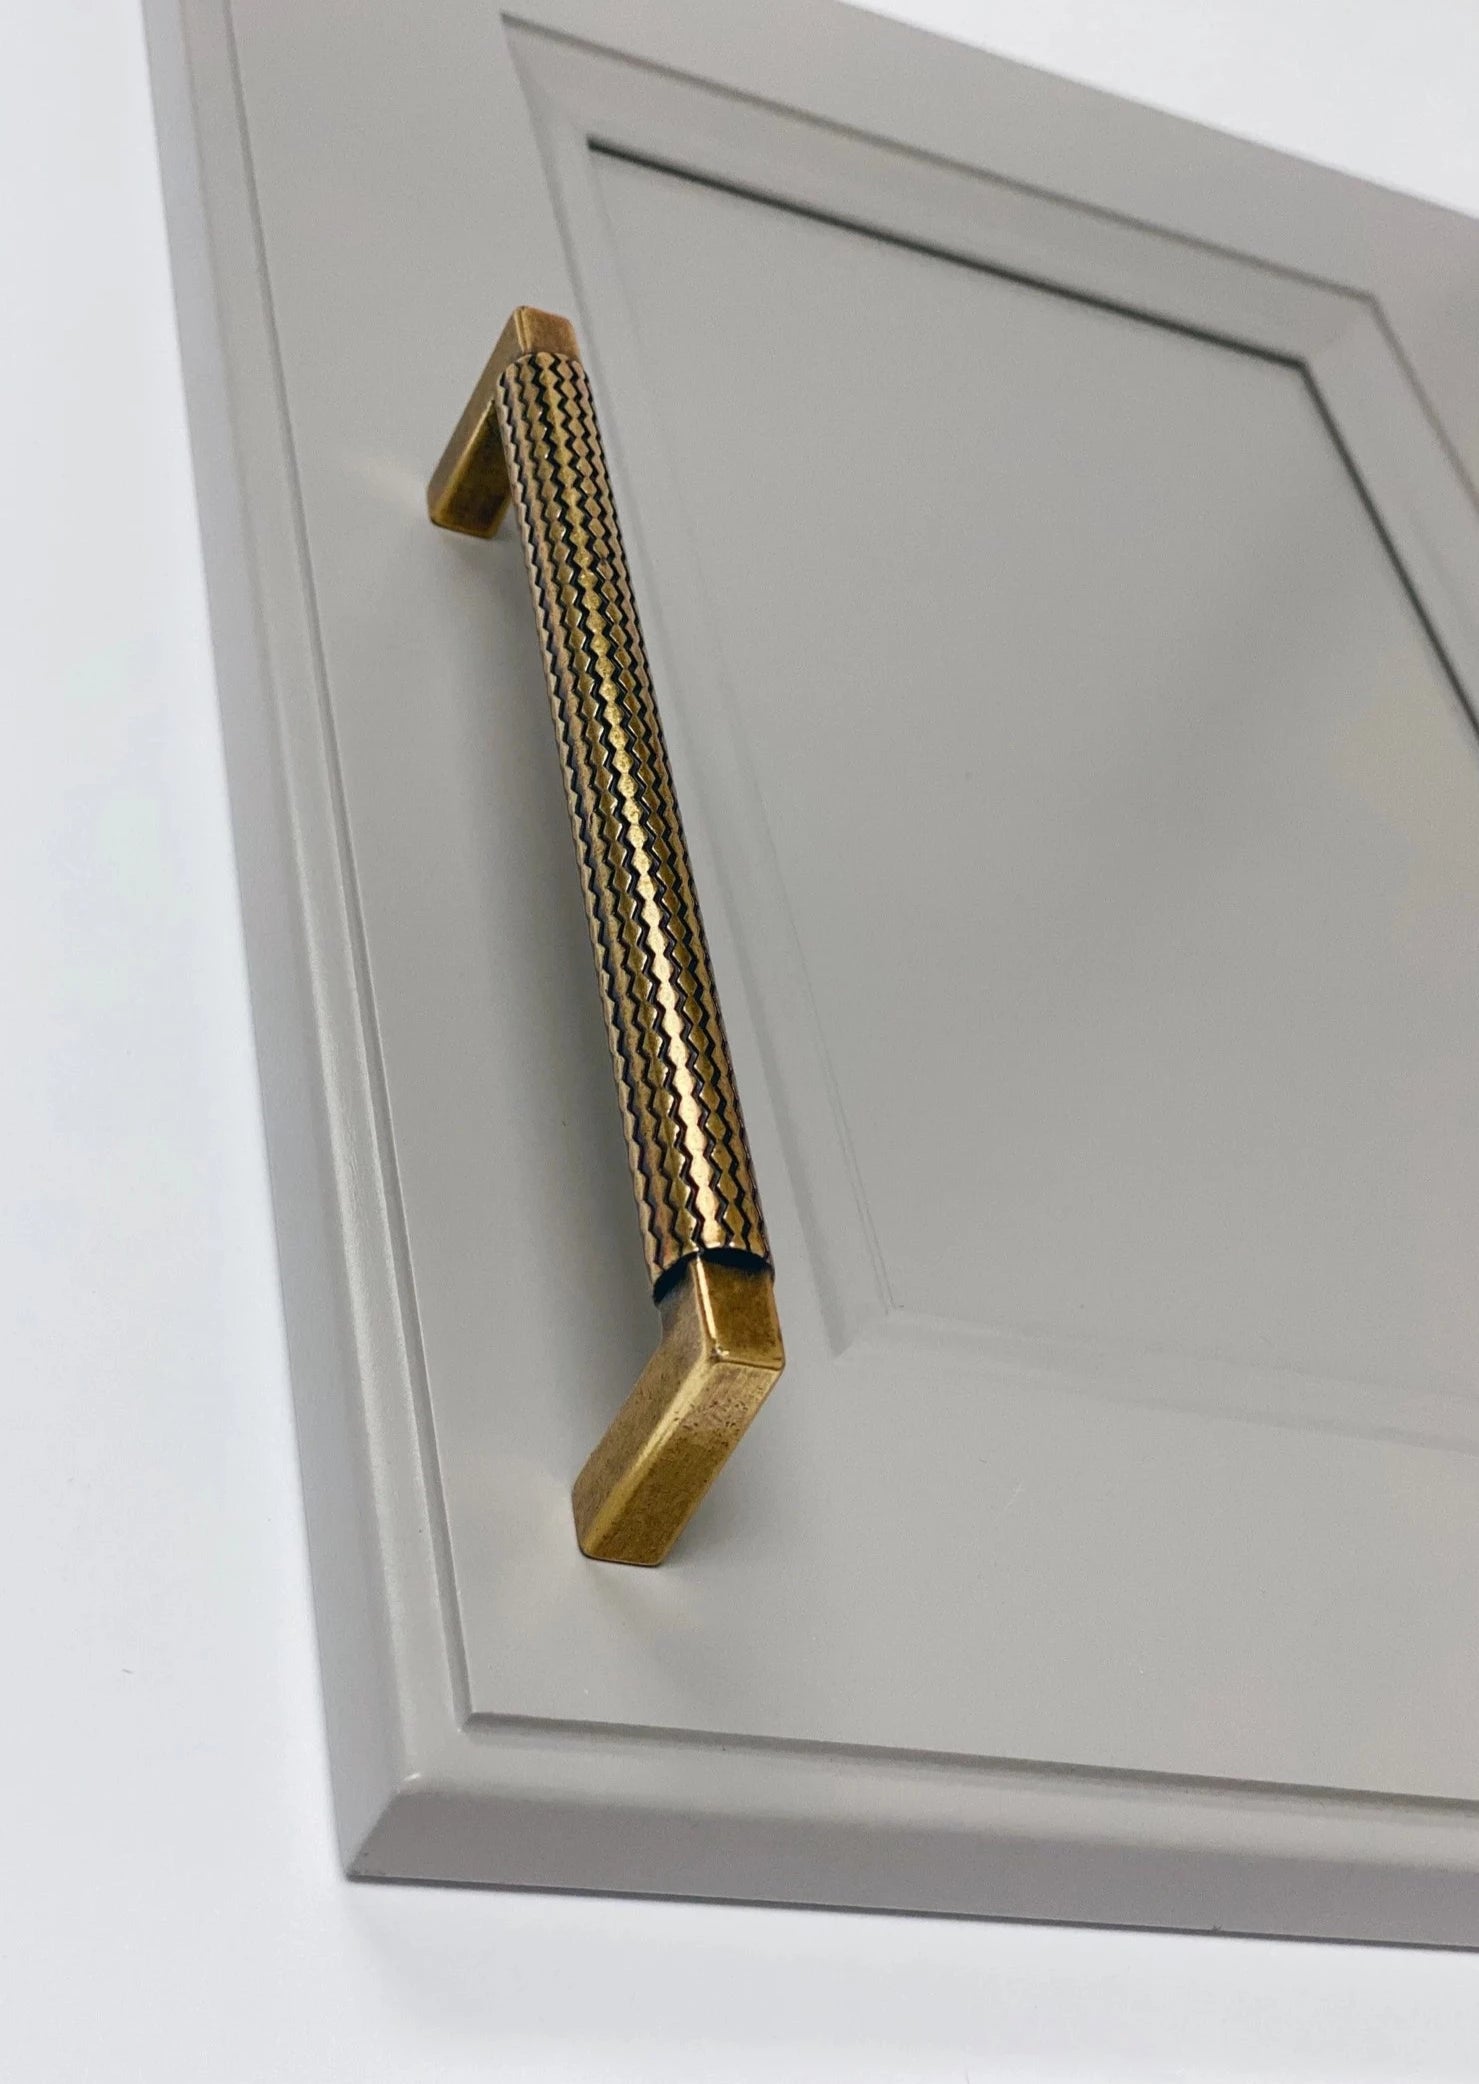 U-Shaped "Venice" Drawer Pull in Antique Brass - Brass Cabinet Hardware | Pulls